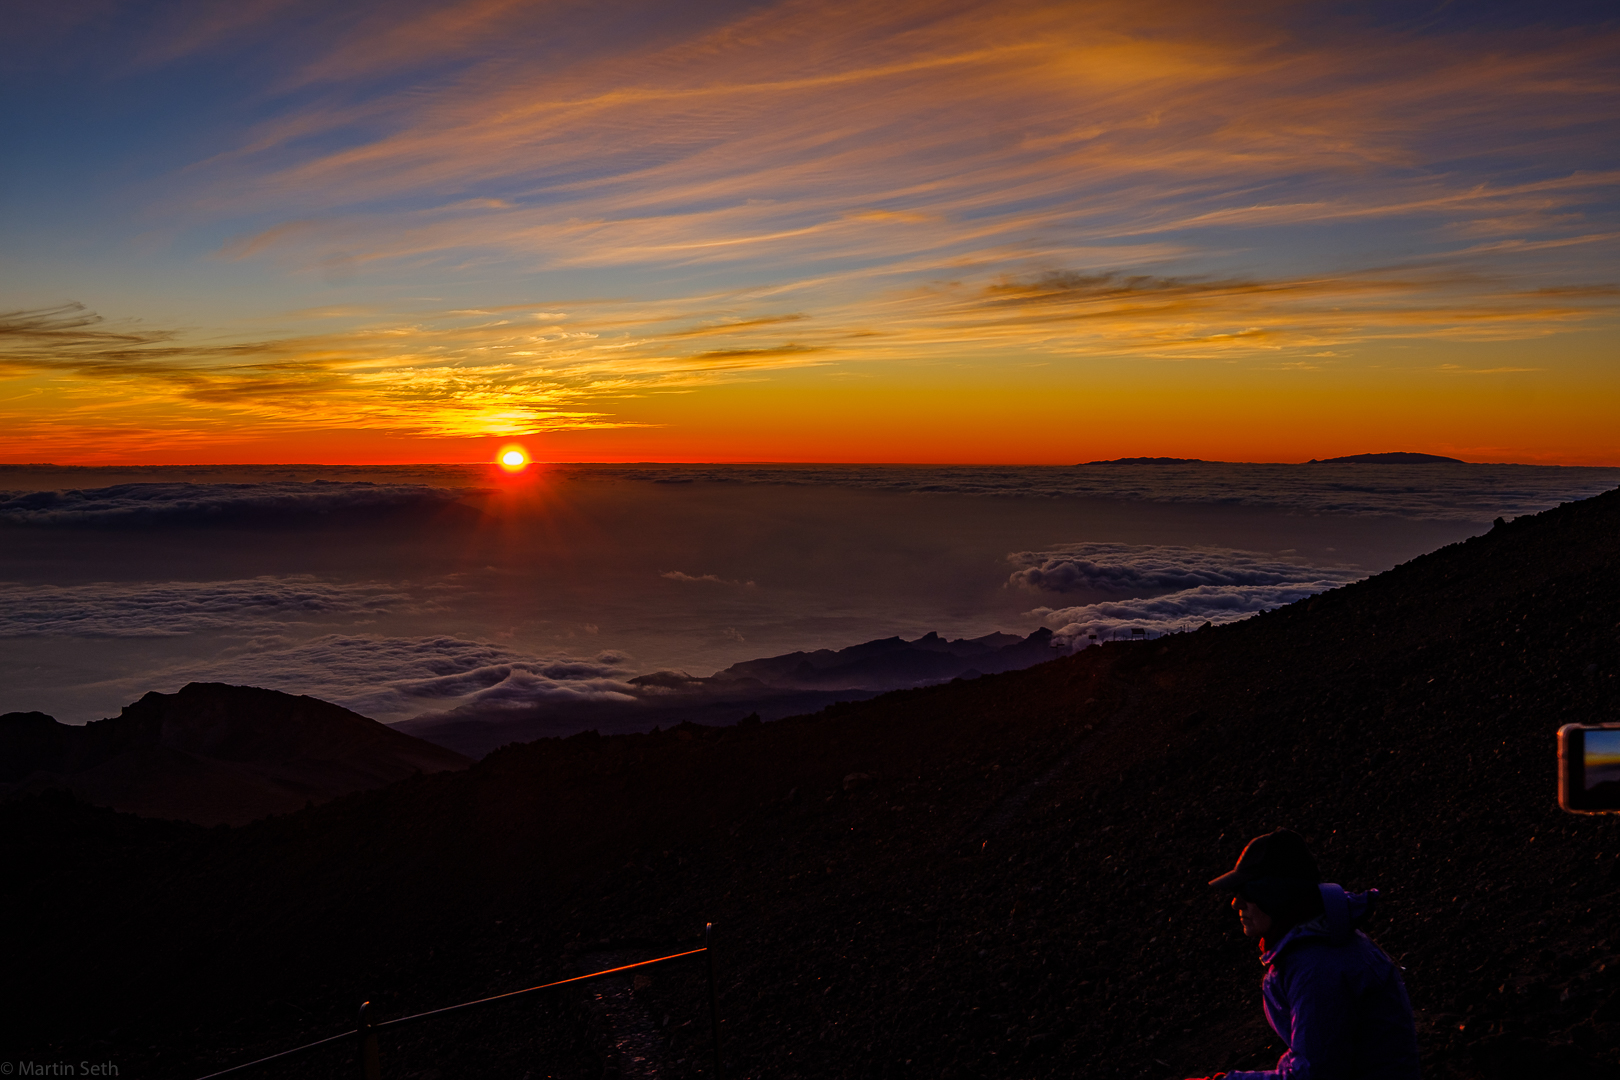 Sonnenuntergang am Teide